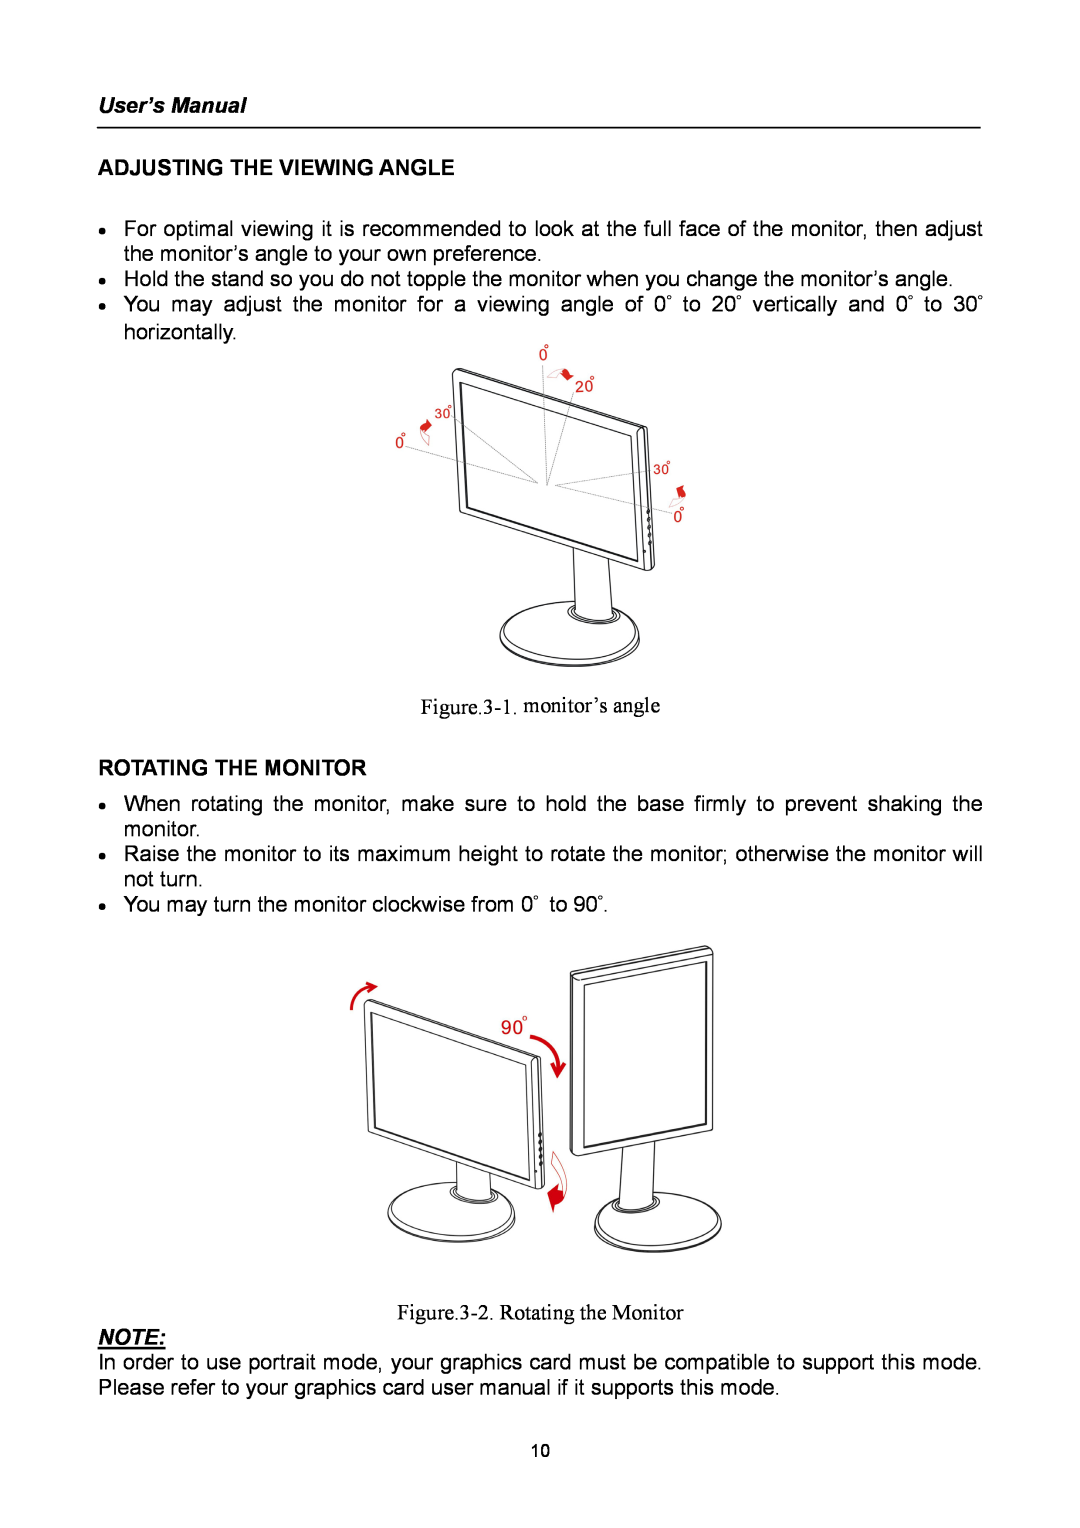 Compaq HW194 user manual User’s Manual, Adjusting The Viewing Angle, Rotating The Monitor 